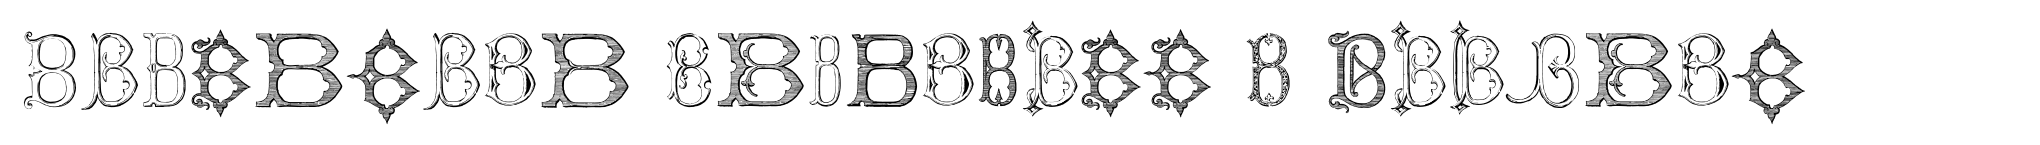 Victorian Alphabets B Regular image